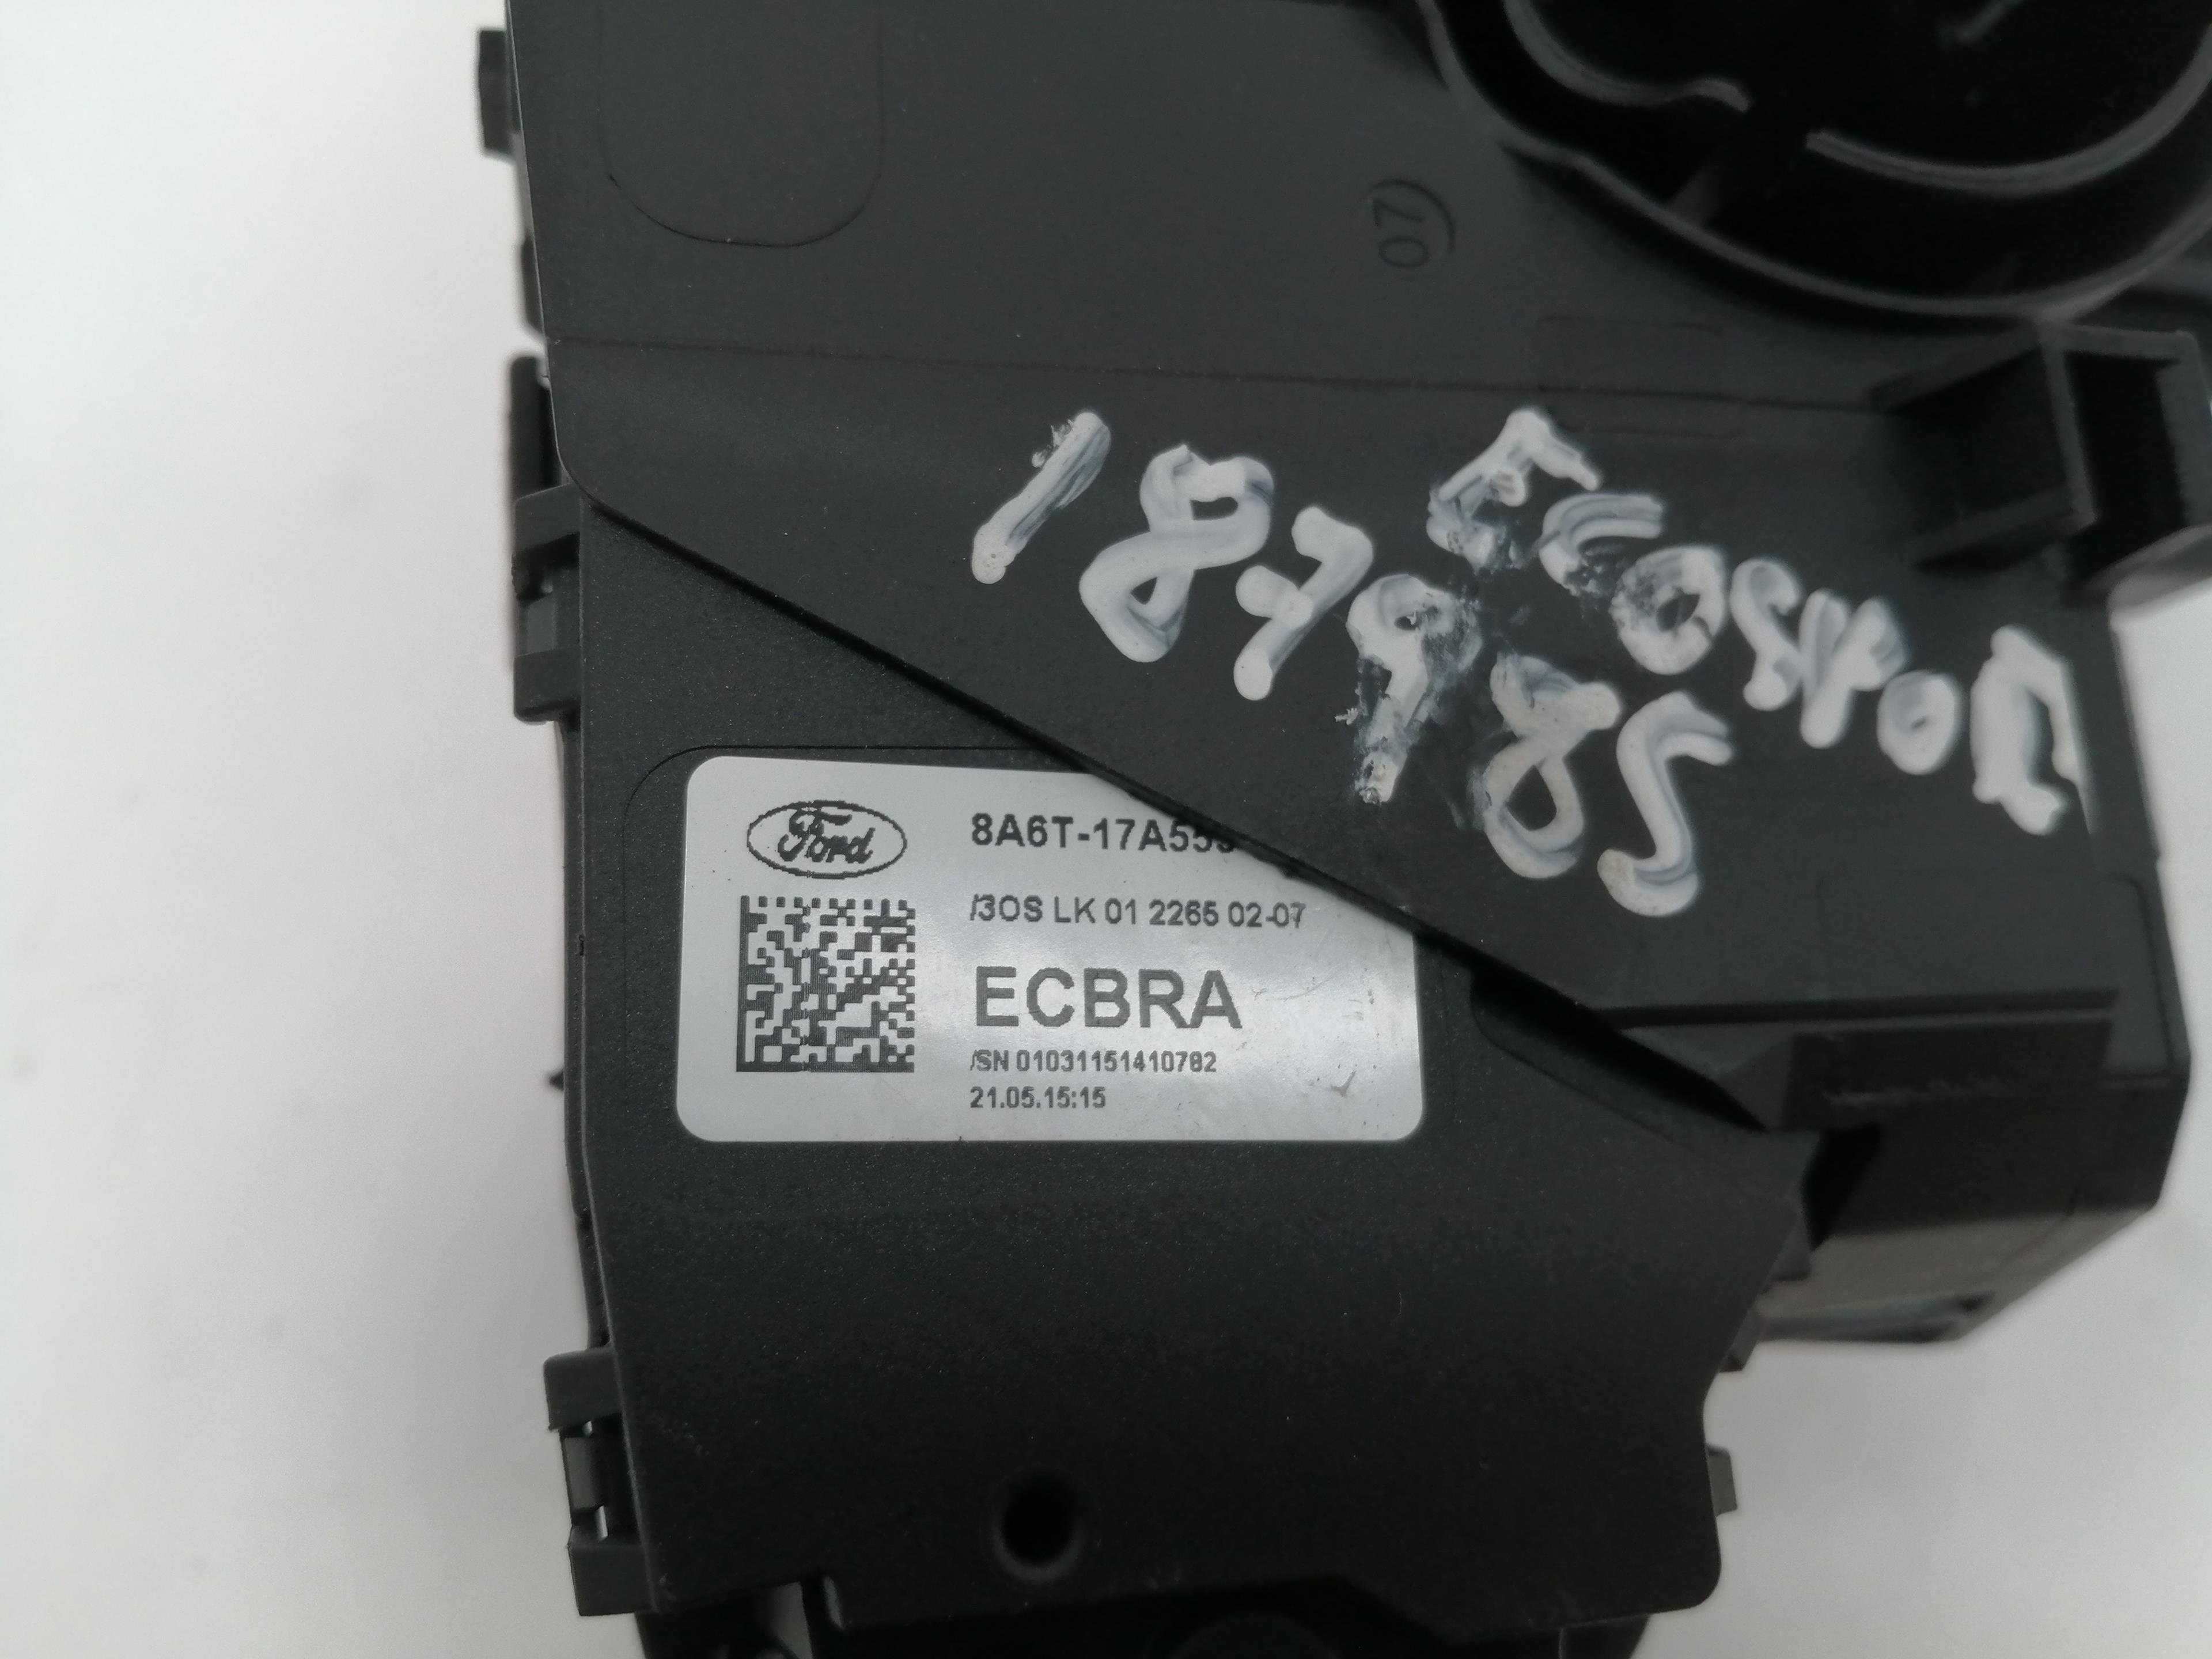 FORD EcoSport 1 generation (2003-2012) Headlight Switch Control Unit CN1513N064BB, 8A6T13335BC 25229317